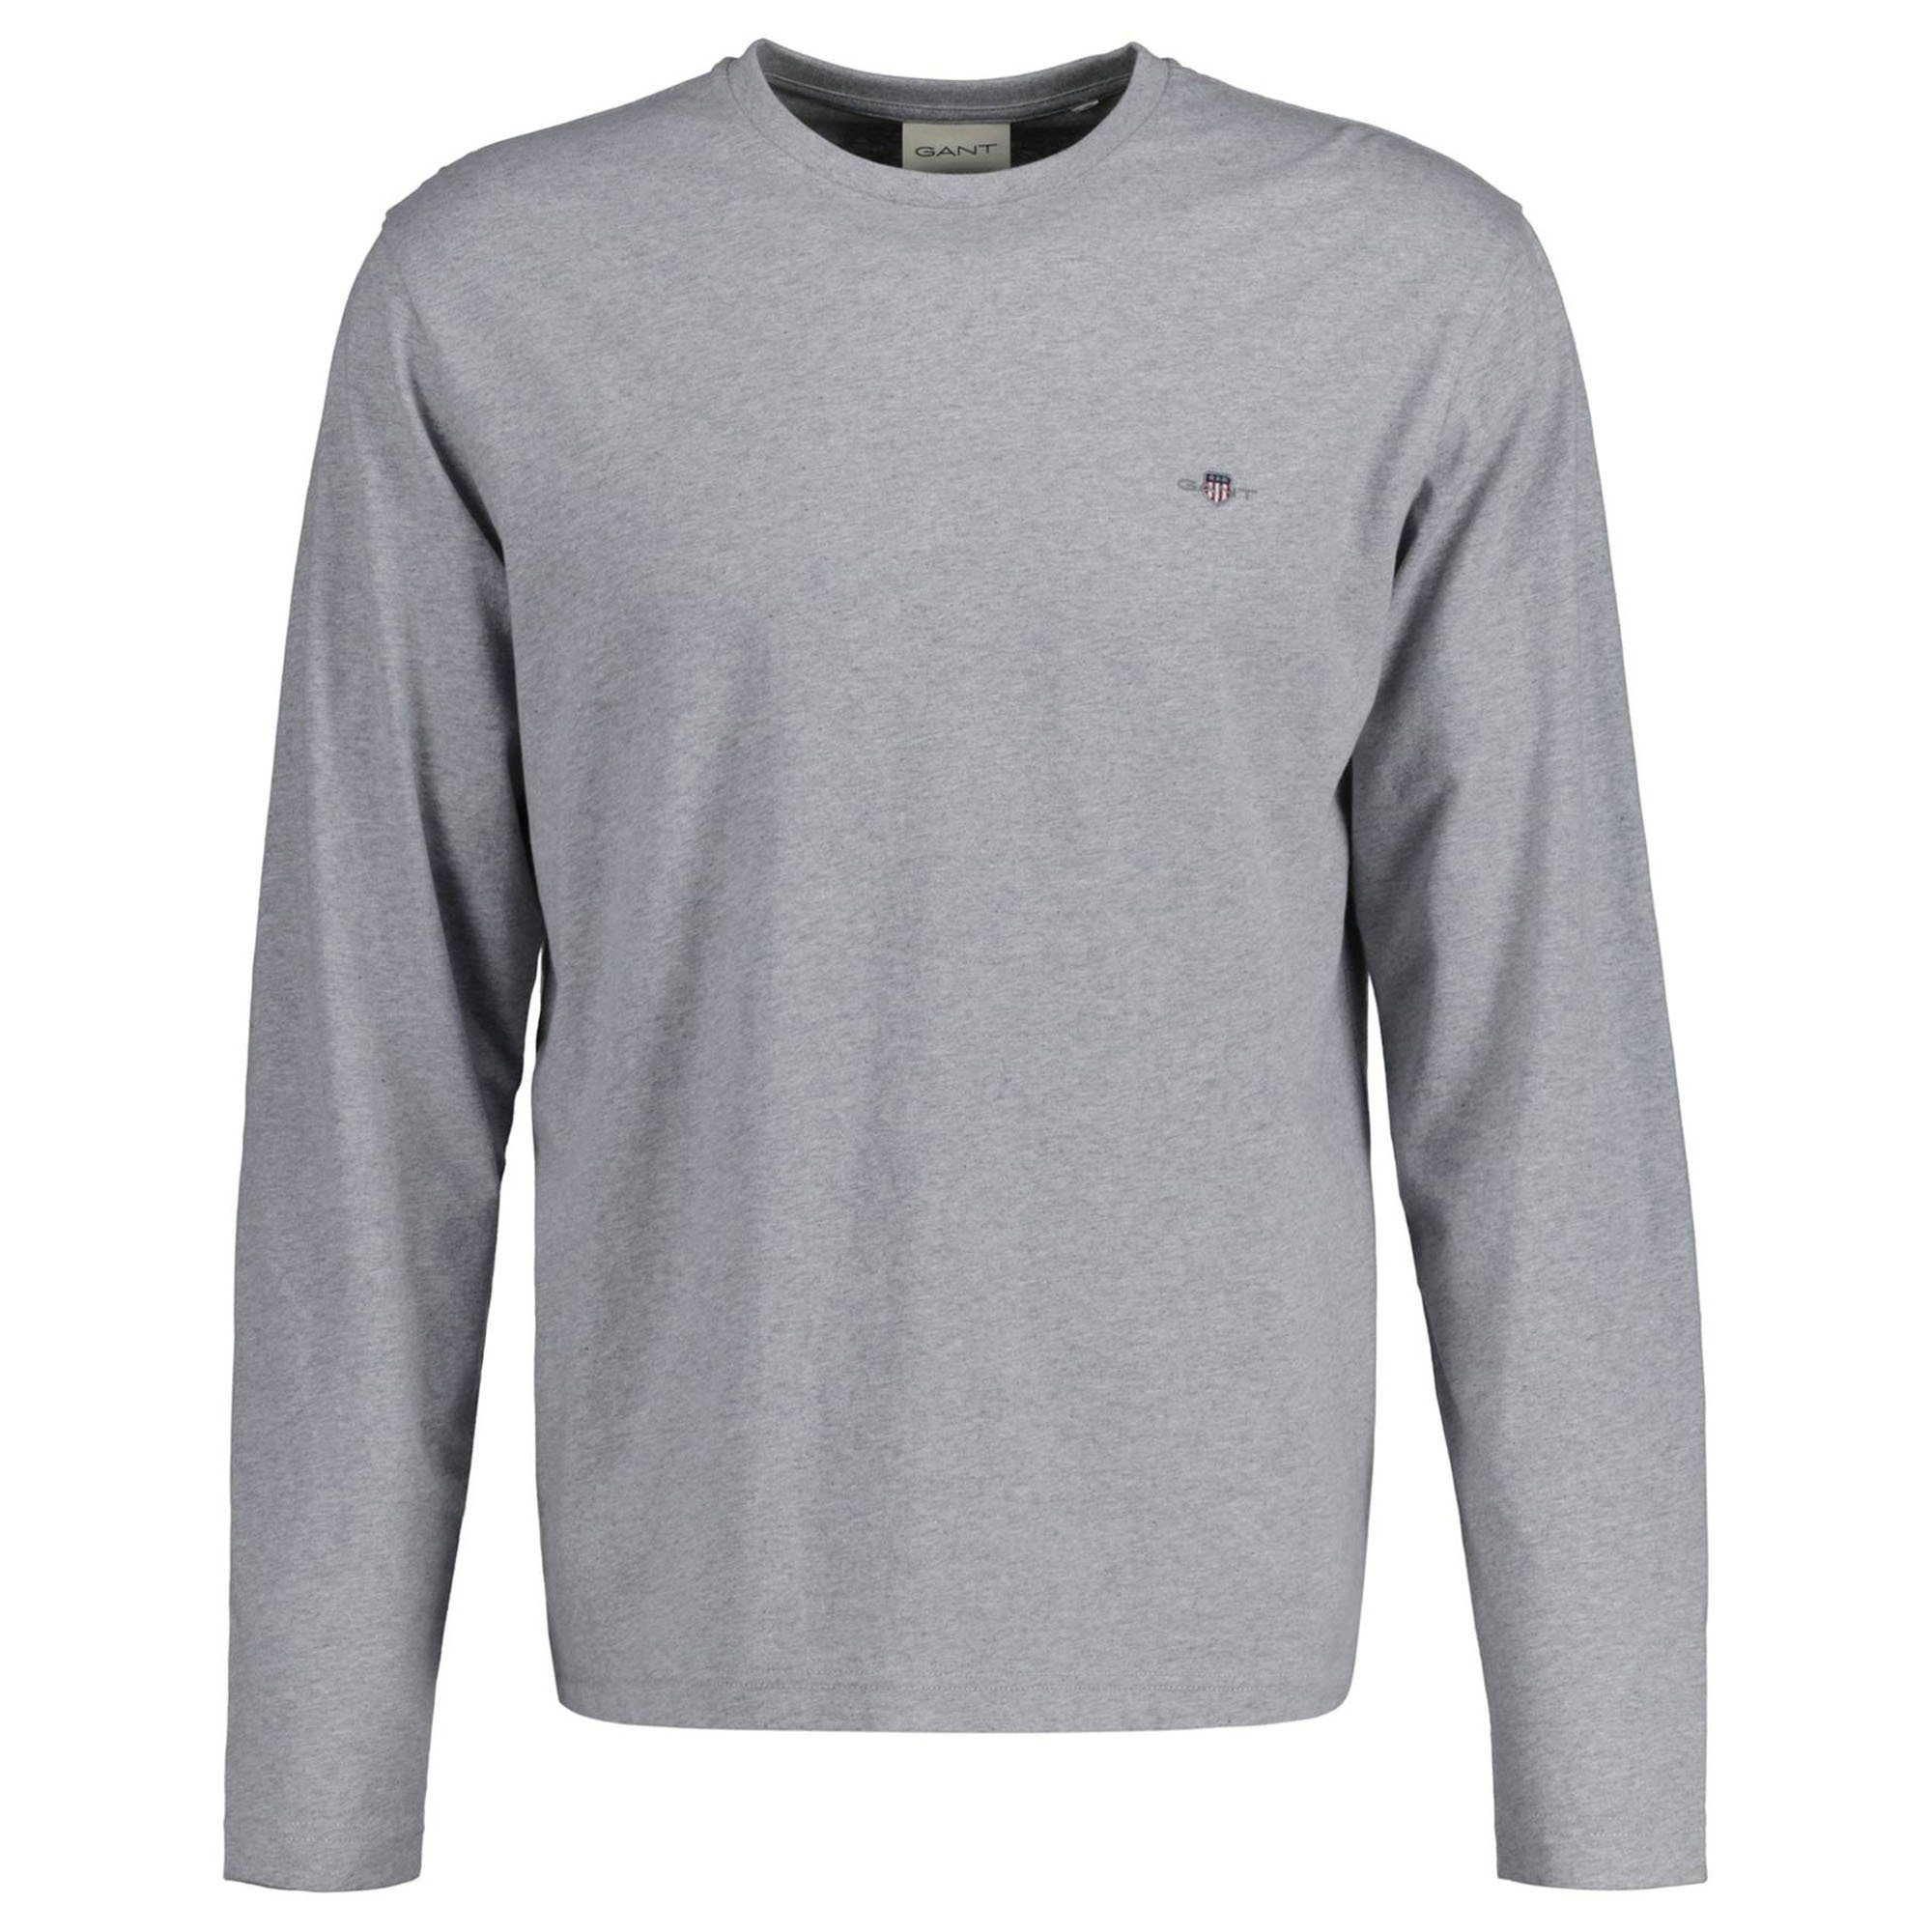 Herren Grau REGULAR Gant - T-Shirt SHIELD Longsleeve Shirt LS,